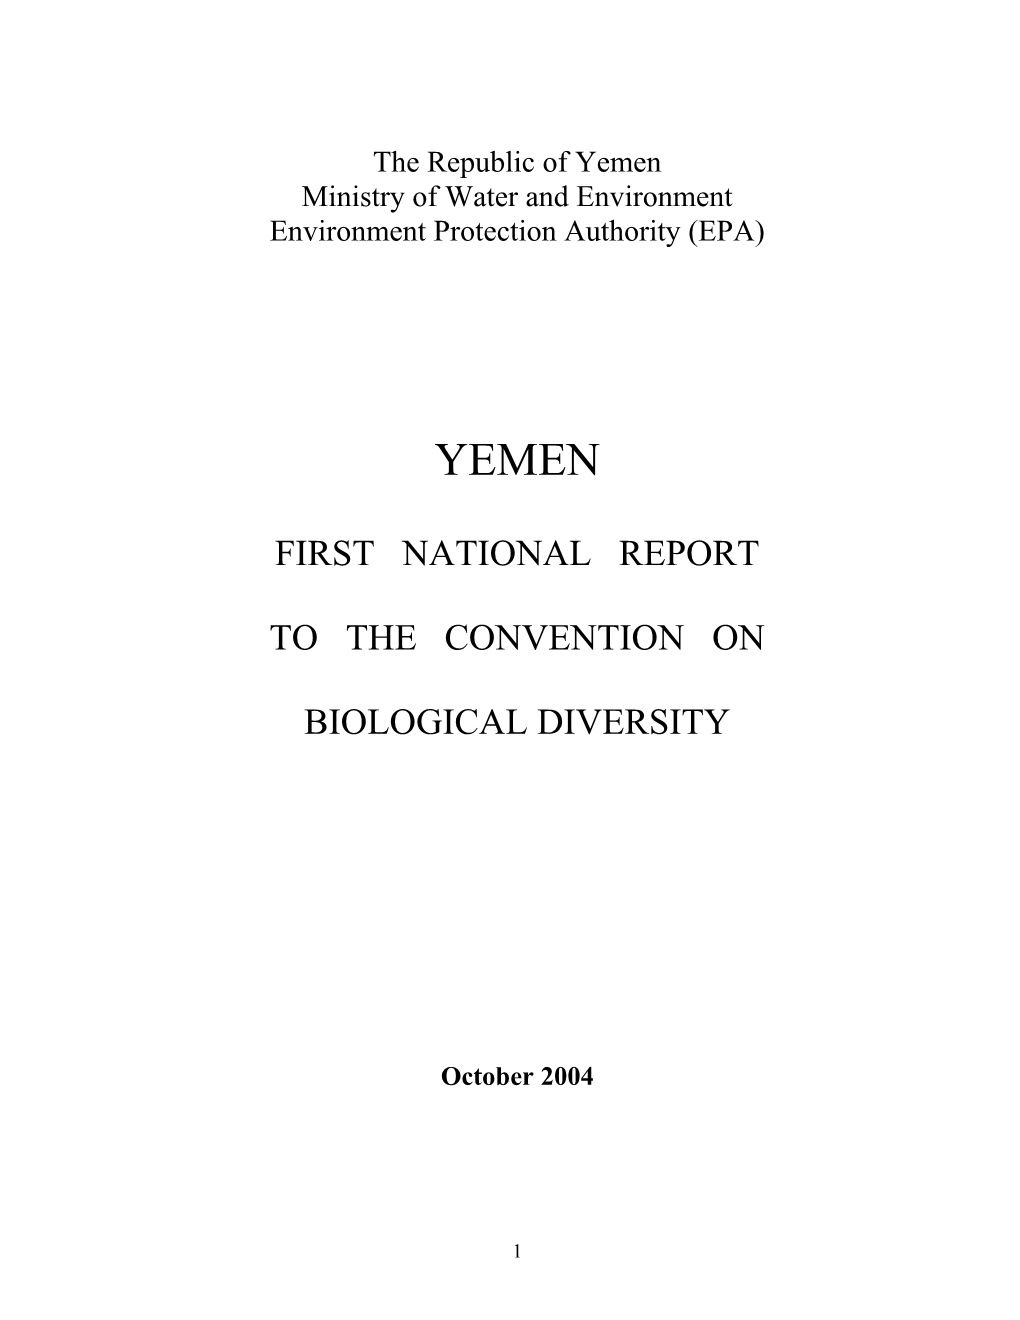 CBD First National Report - Yemen (English Version)